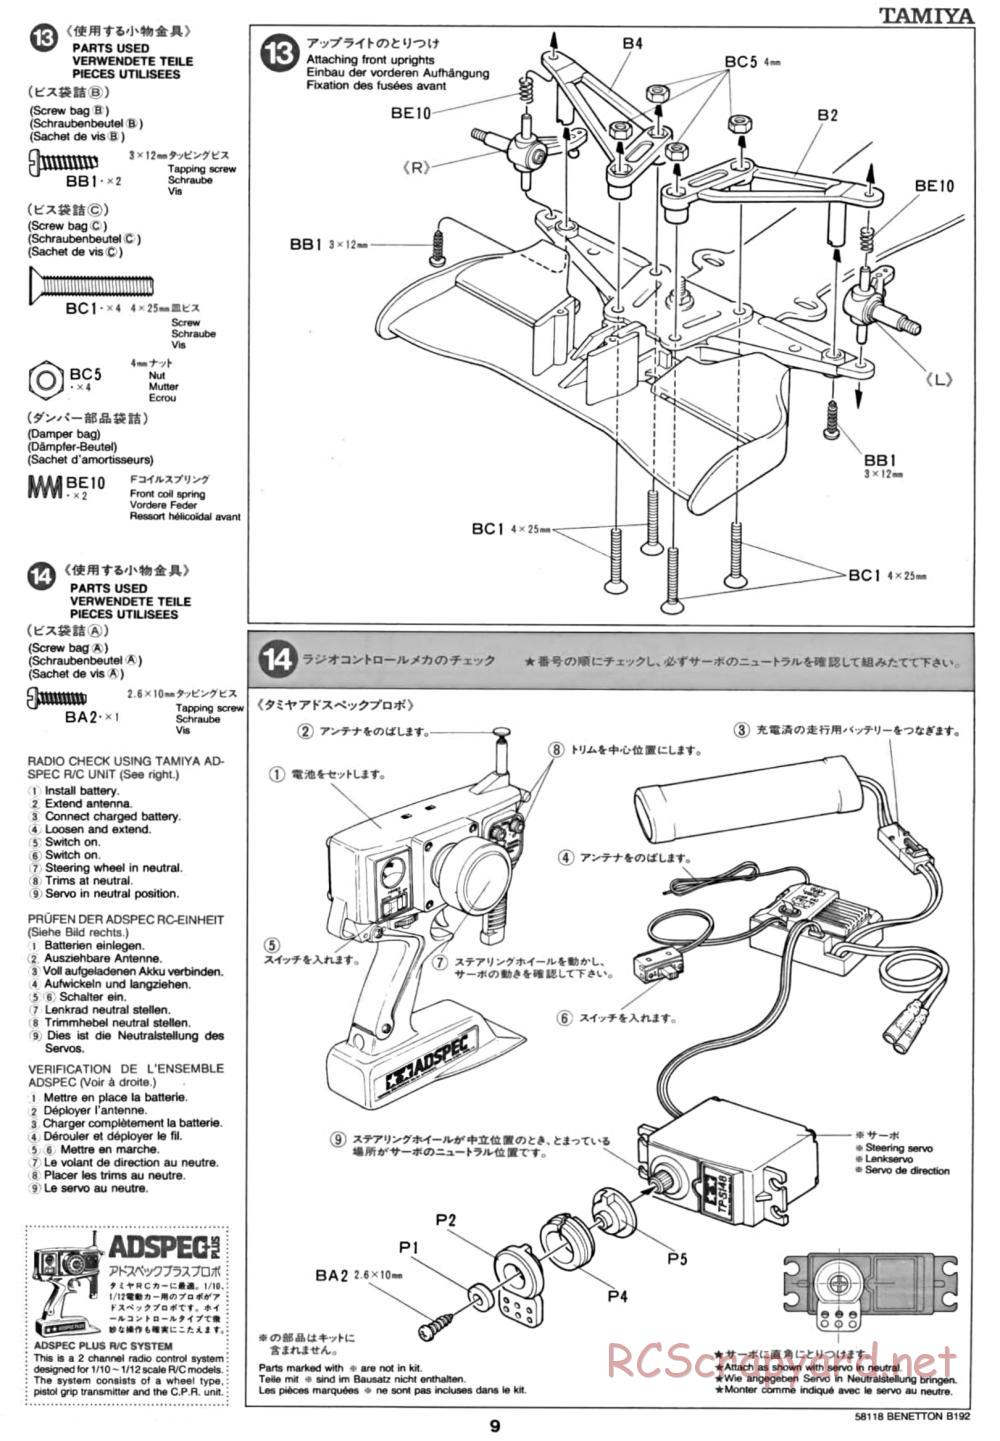 Tamiya - Benetton B192 - F102 Chassis - Manual - Page 9